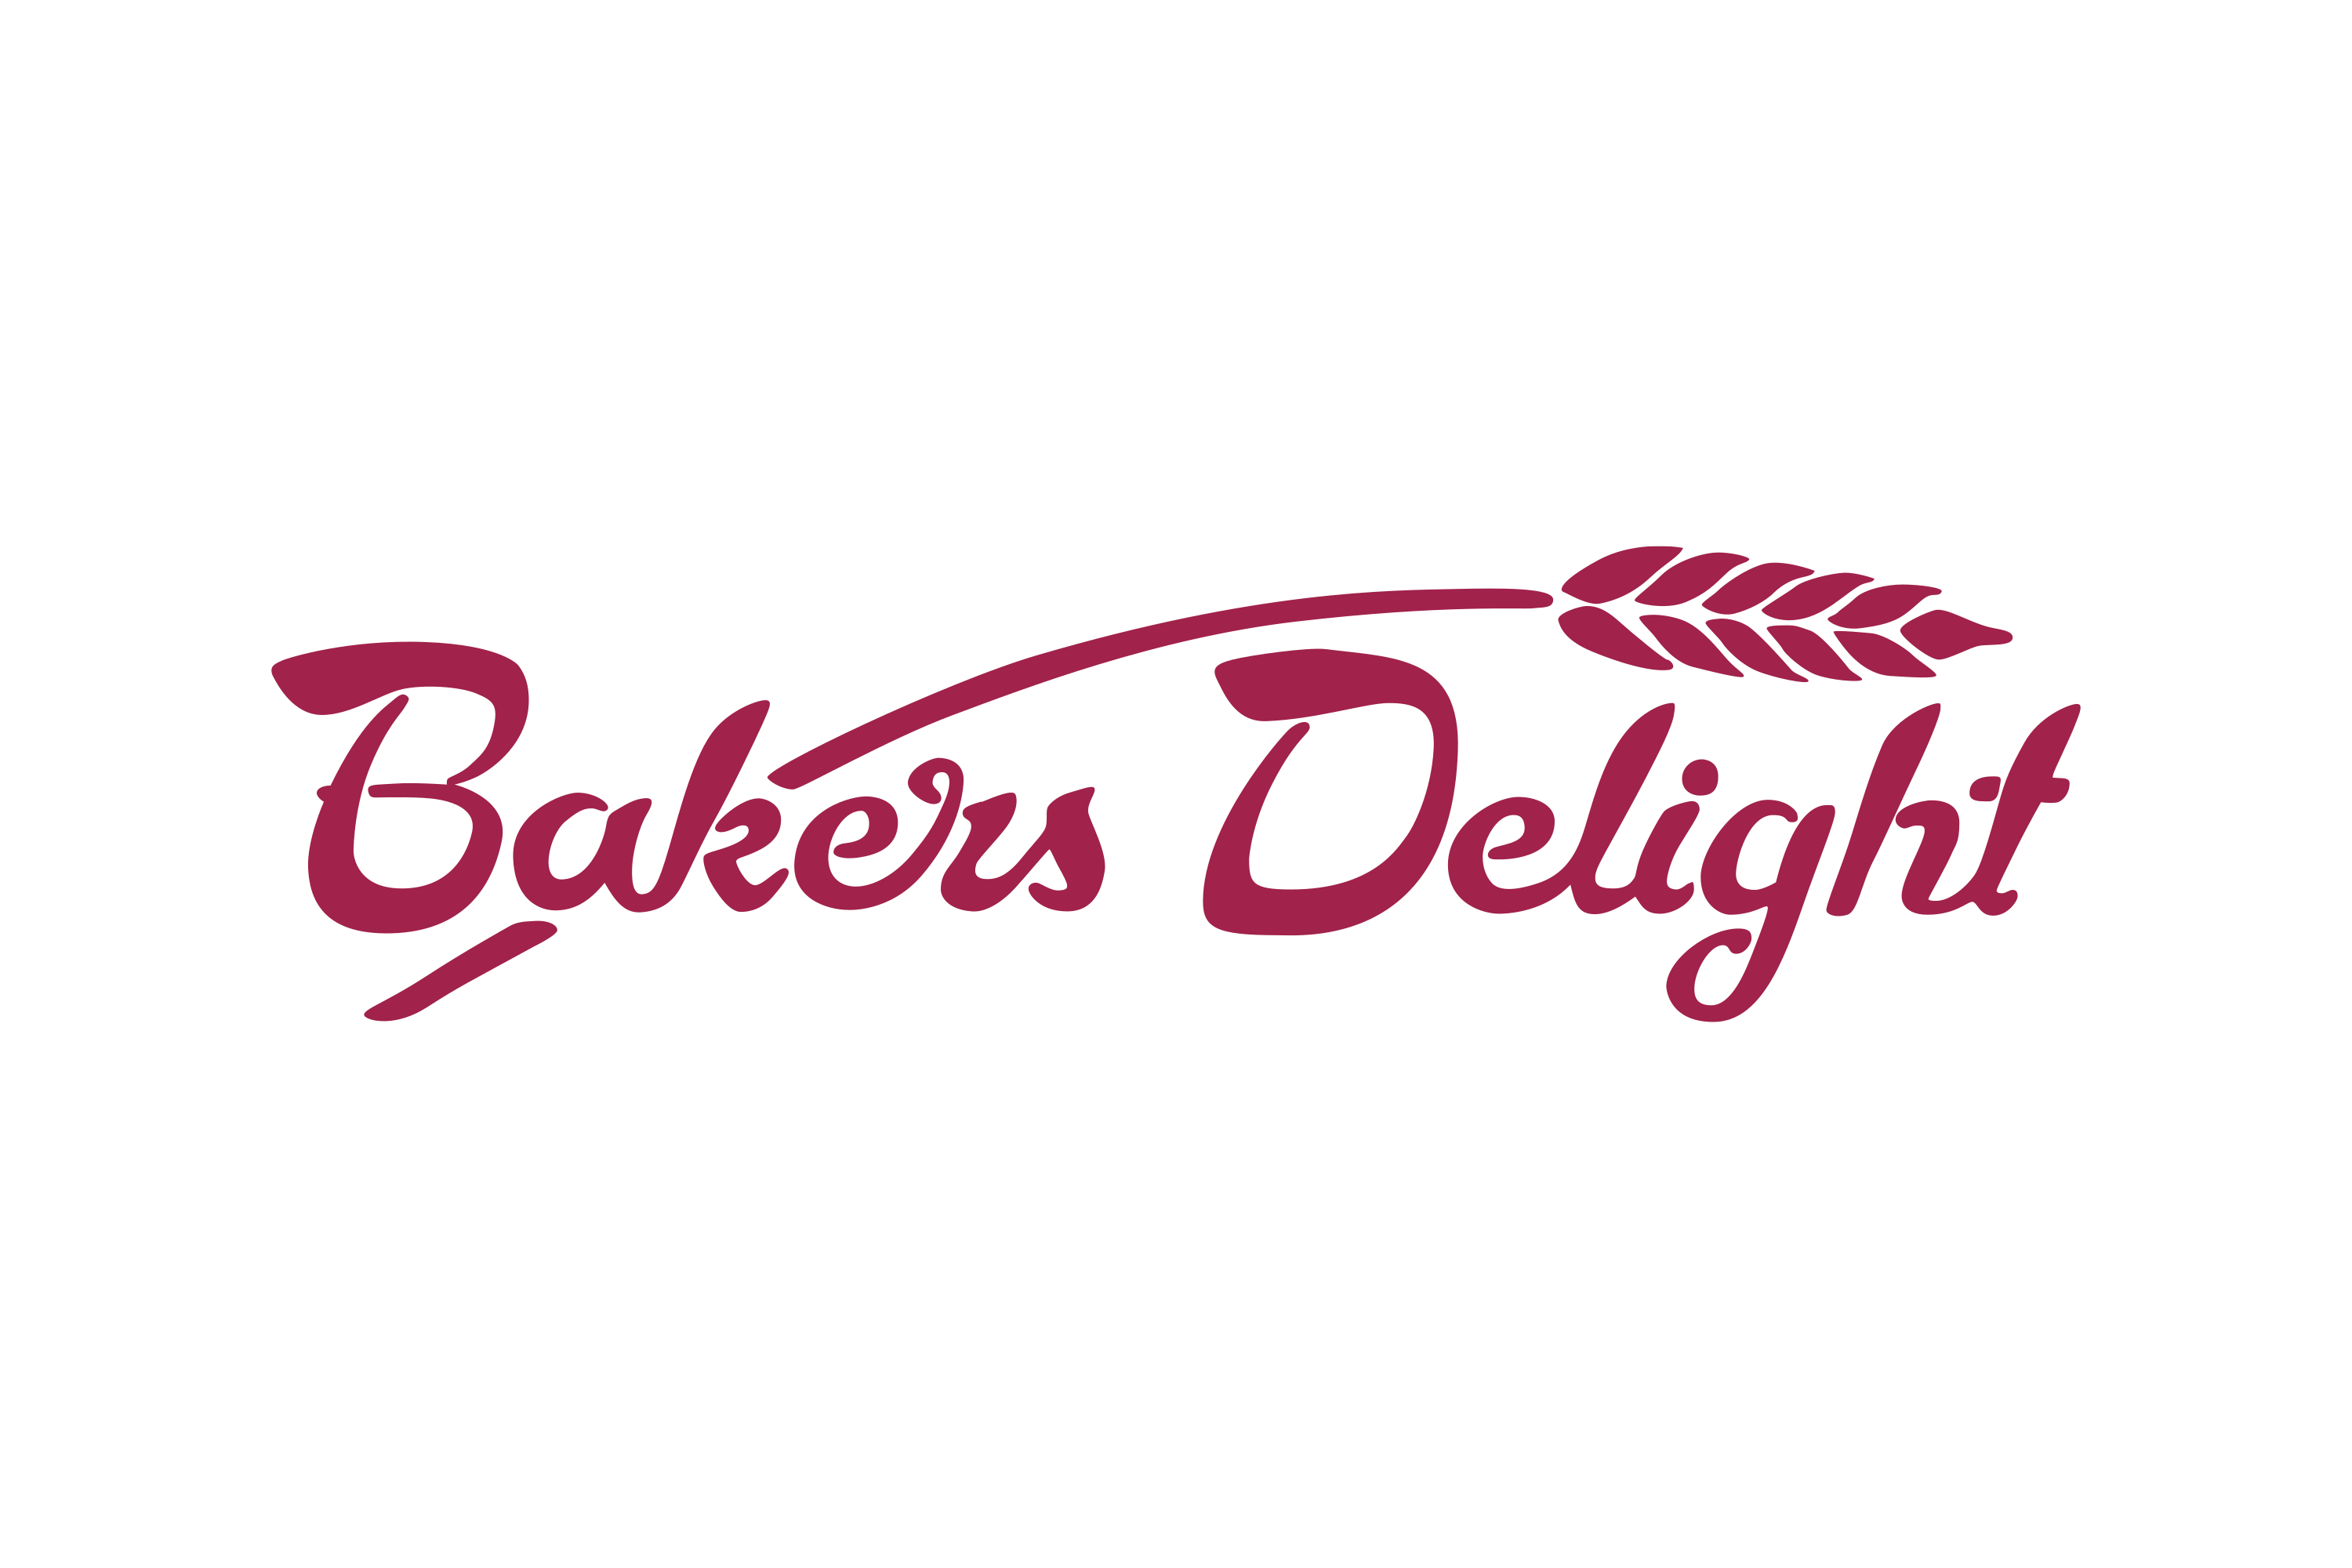 Download Bakers Delight Logo in SVG Vector or PNG File Format - Logo.wine